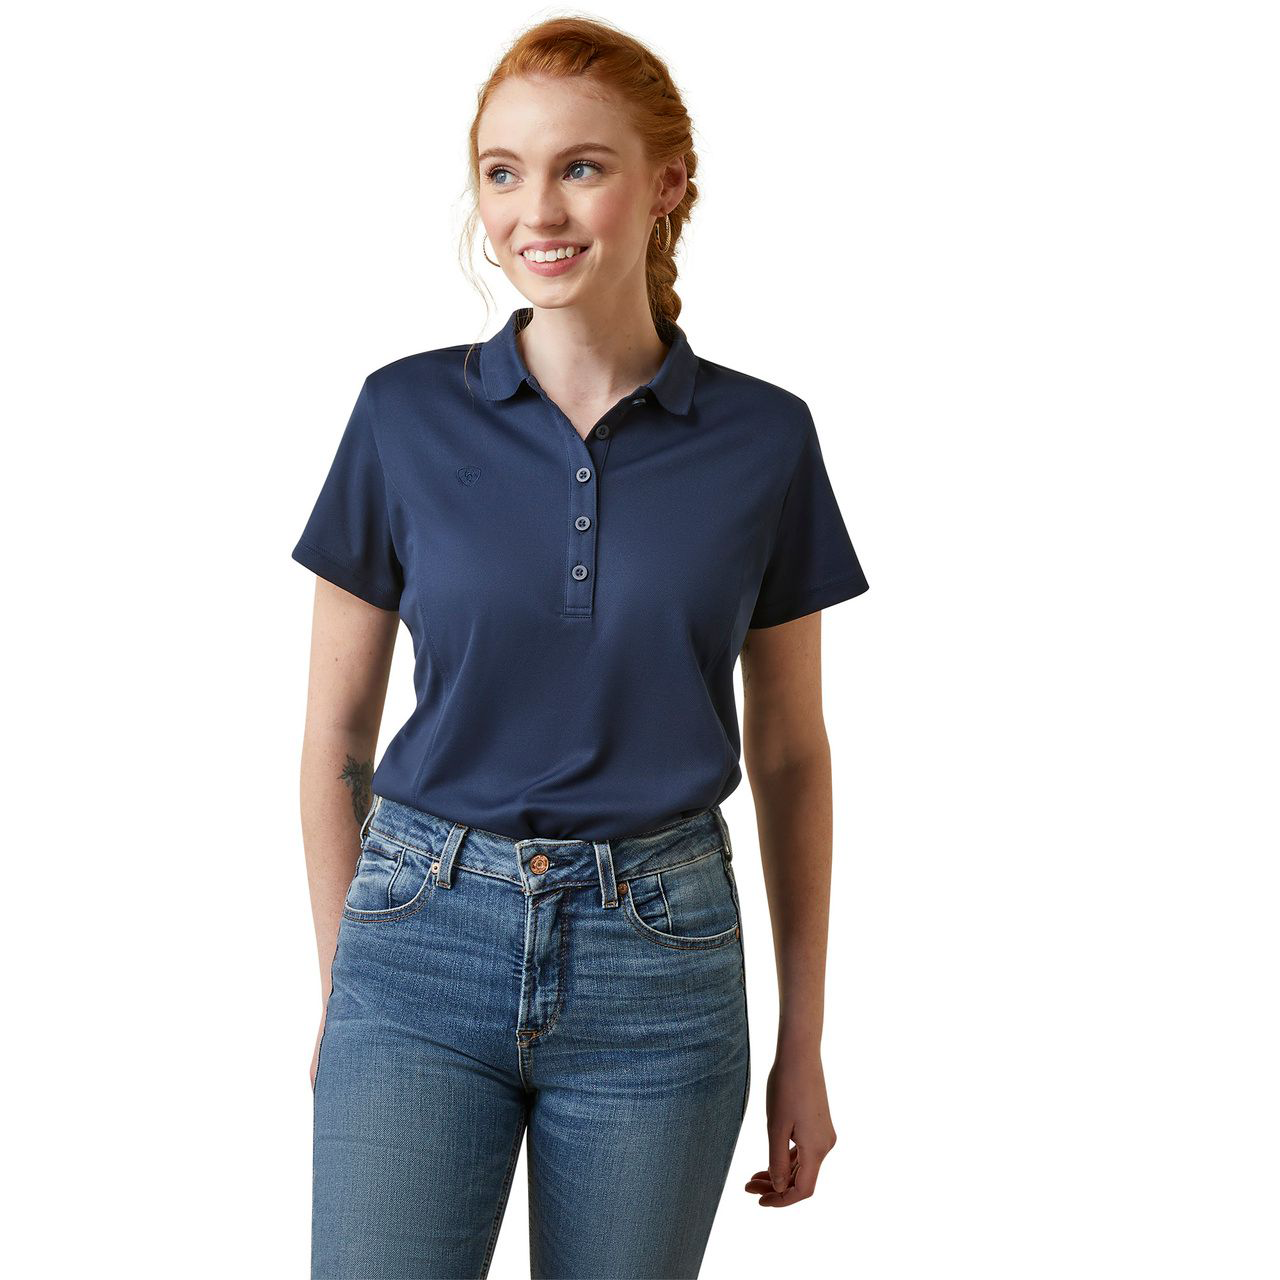 Ariat TEK Short-Sleeve Polo for Ladies - Navy - L